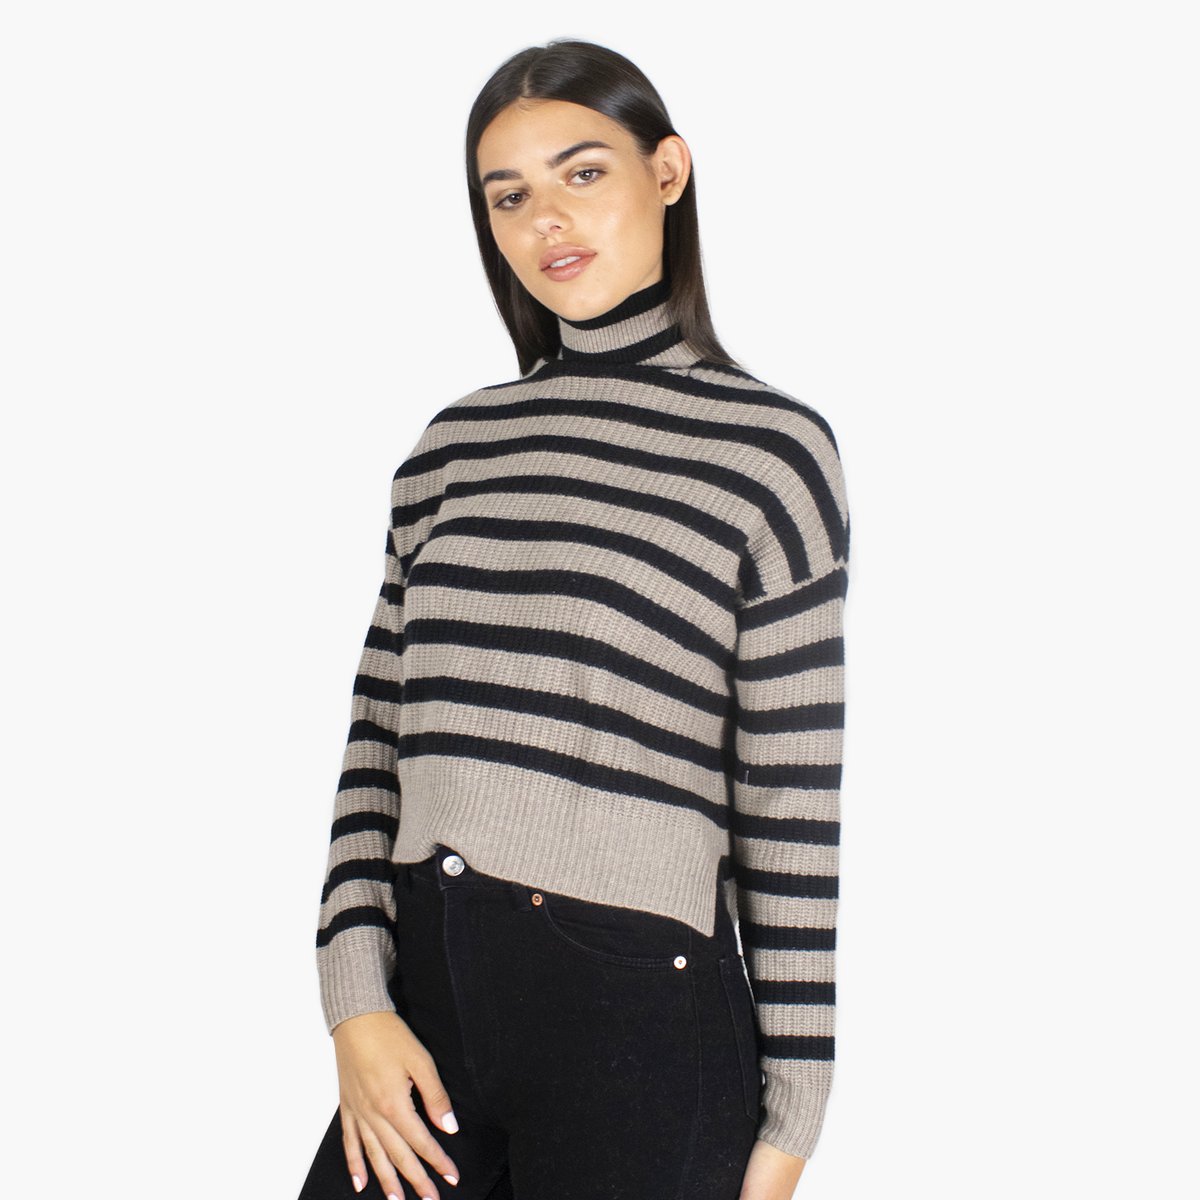 Autumn Cashmere - Striped Shaker Sweater - Council Studio